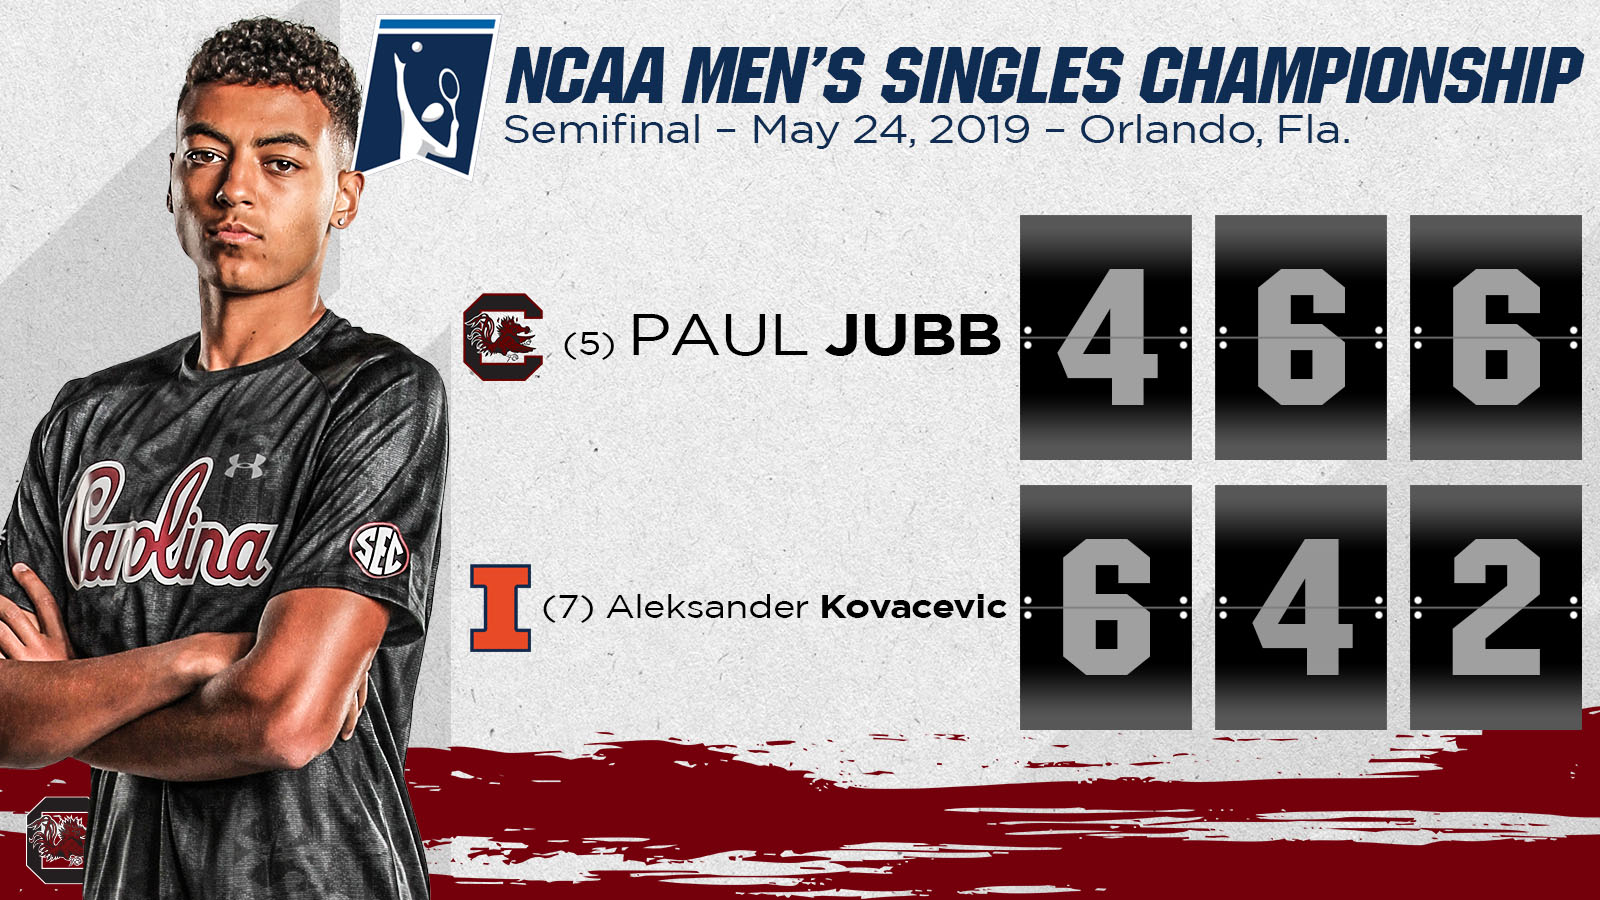 Three-Set Win Sends Jubb to NCAA Singles Final